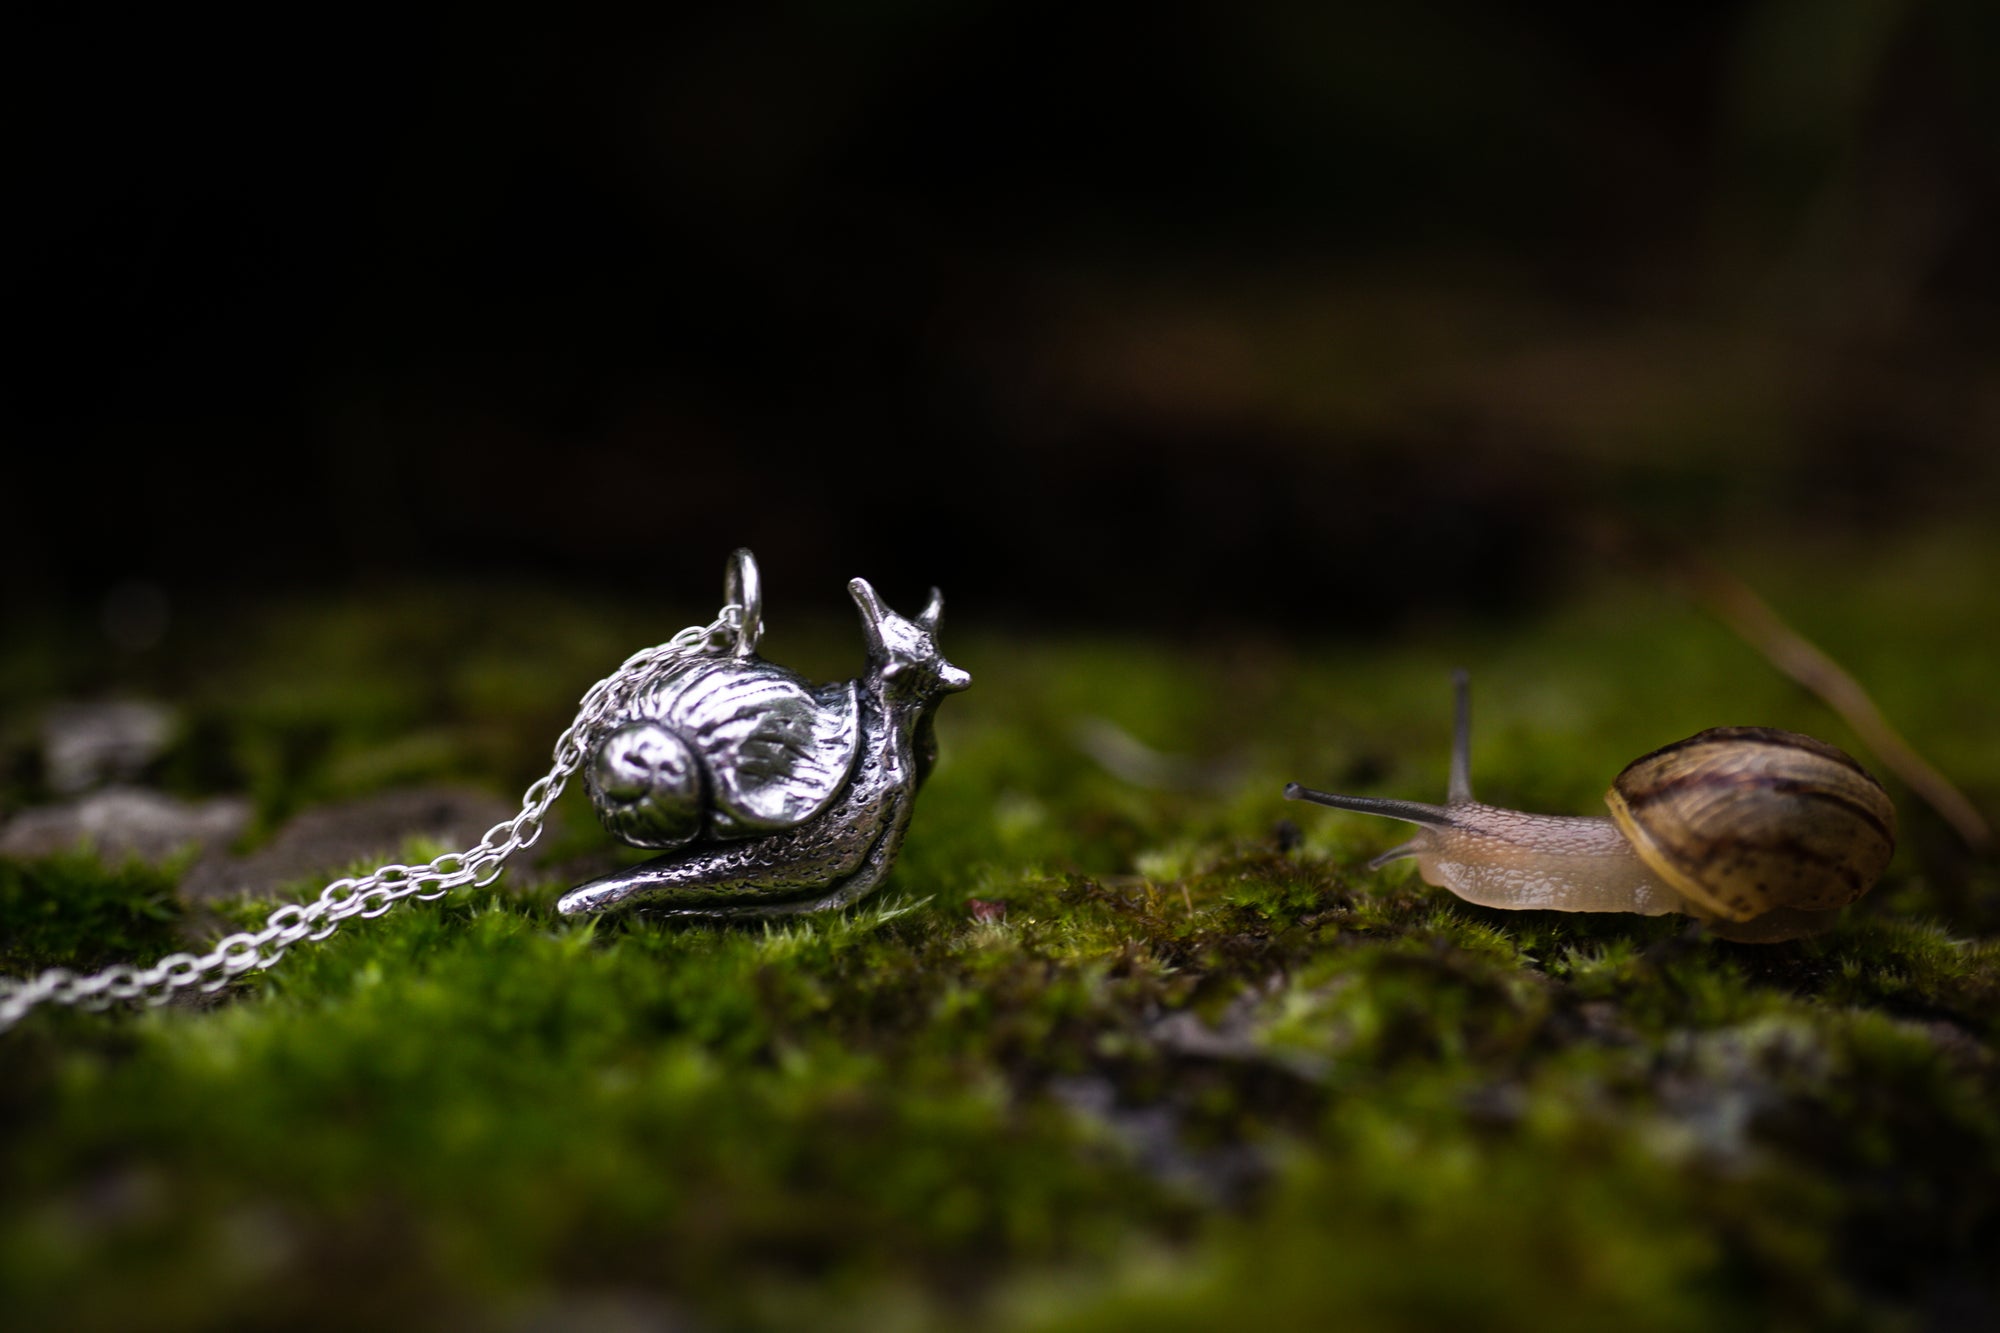 Miniature silver snail necklace